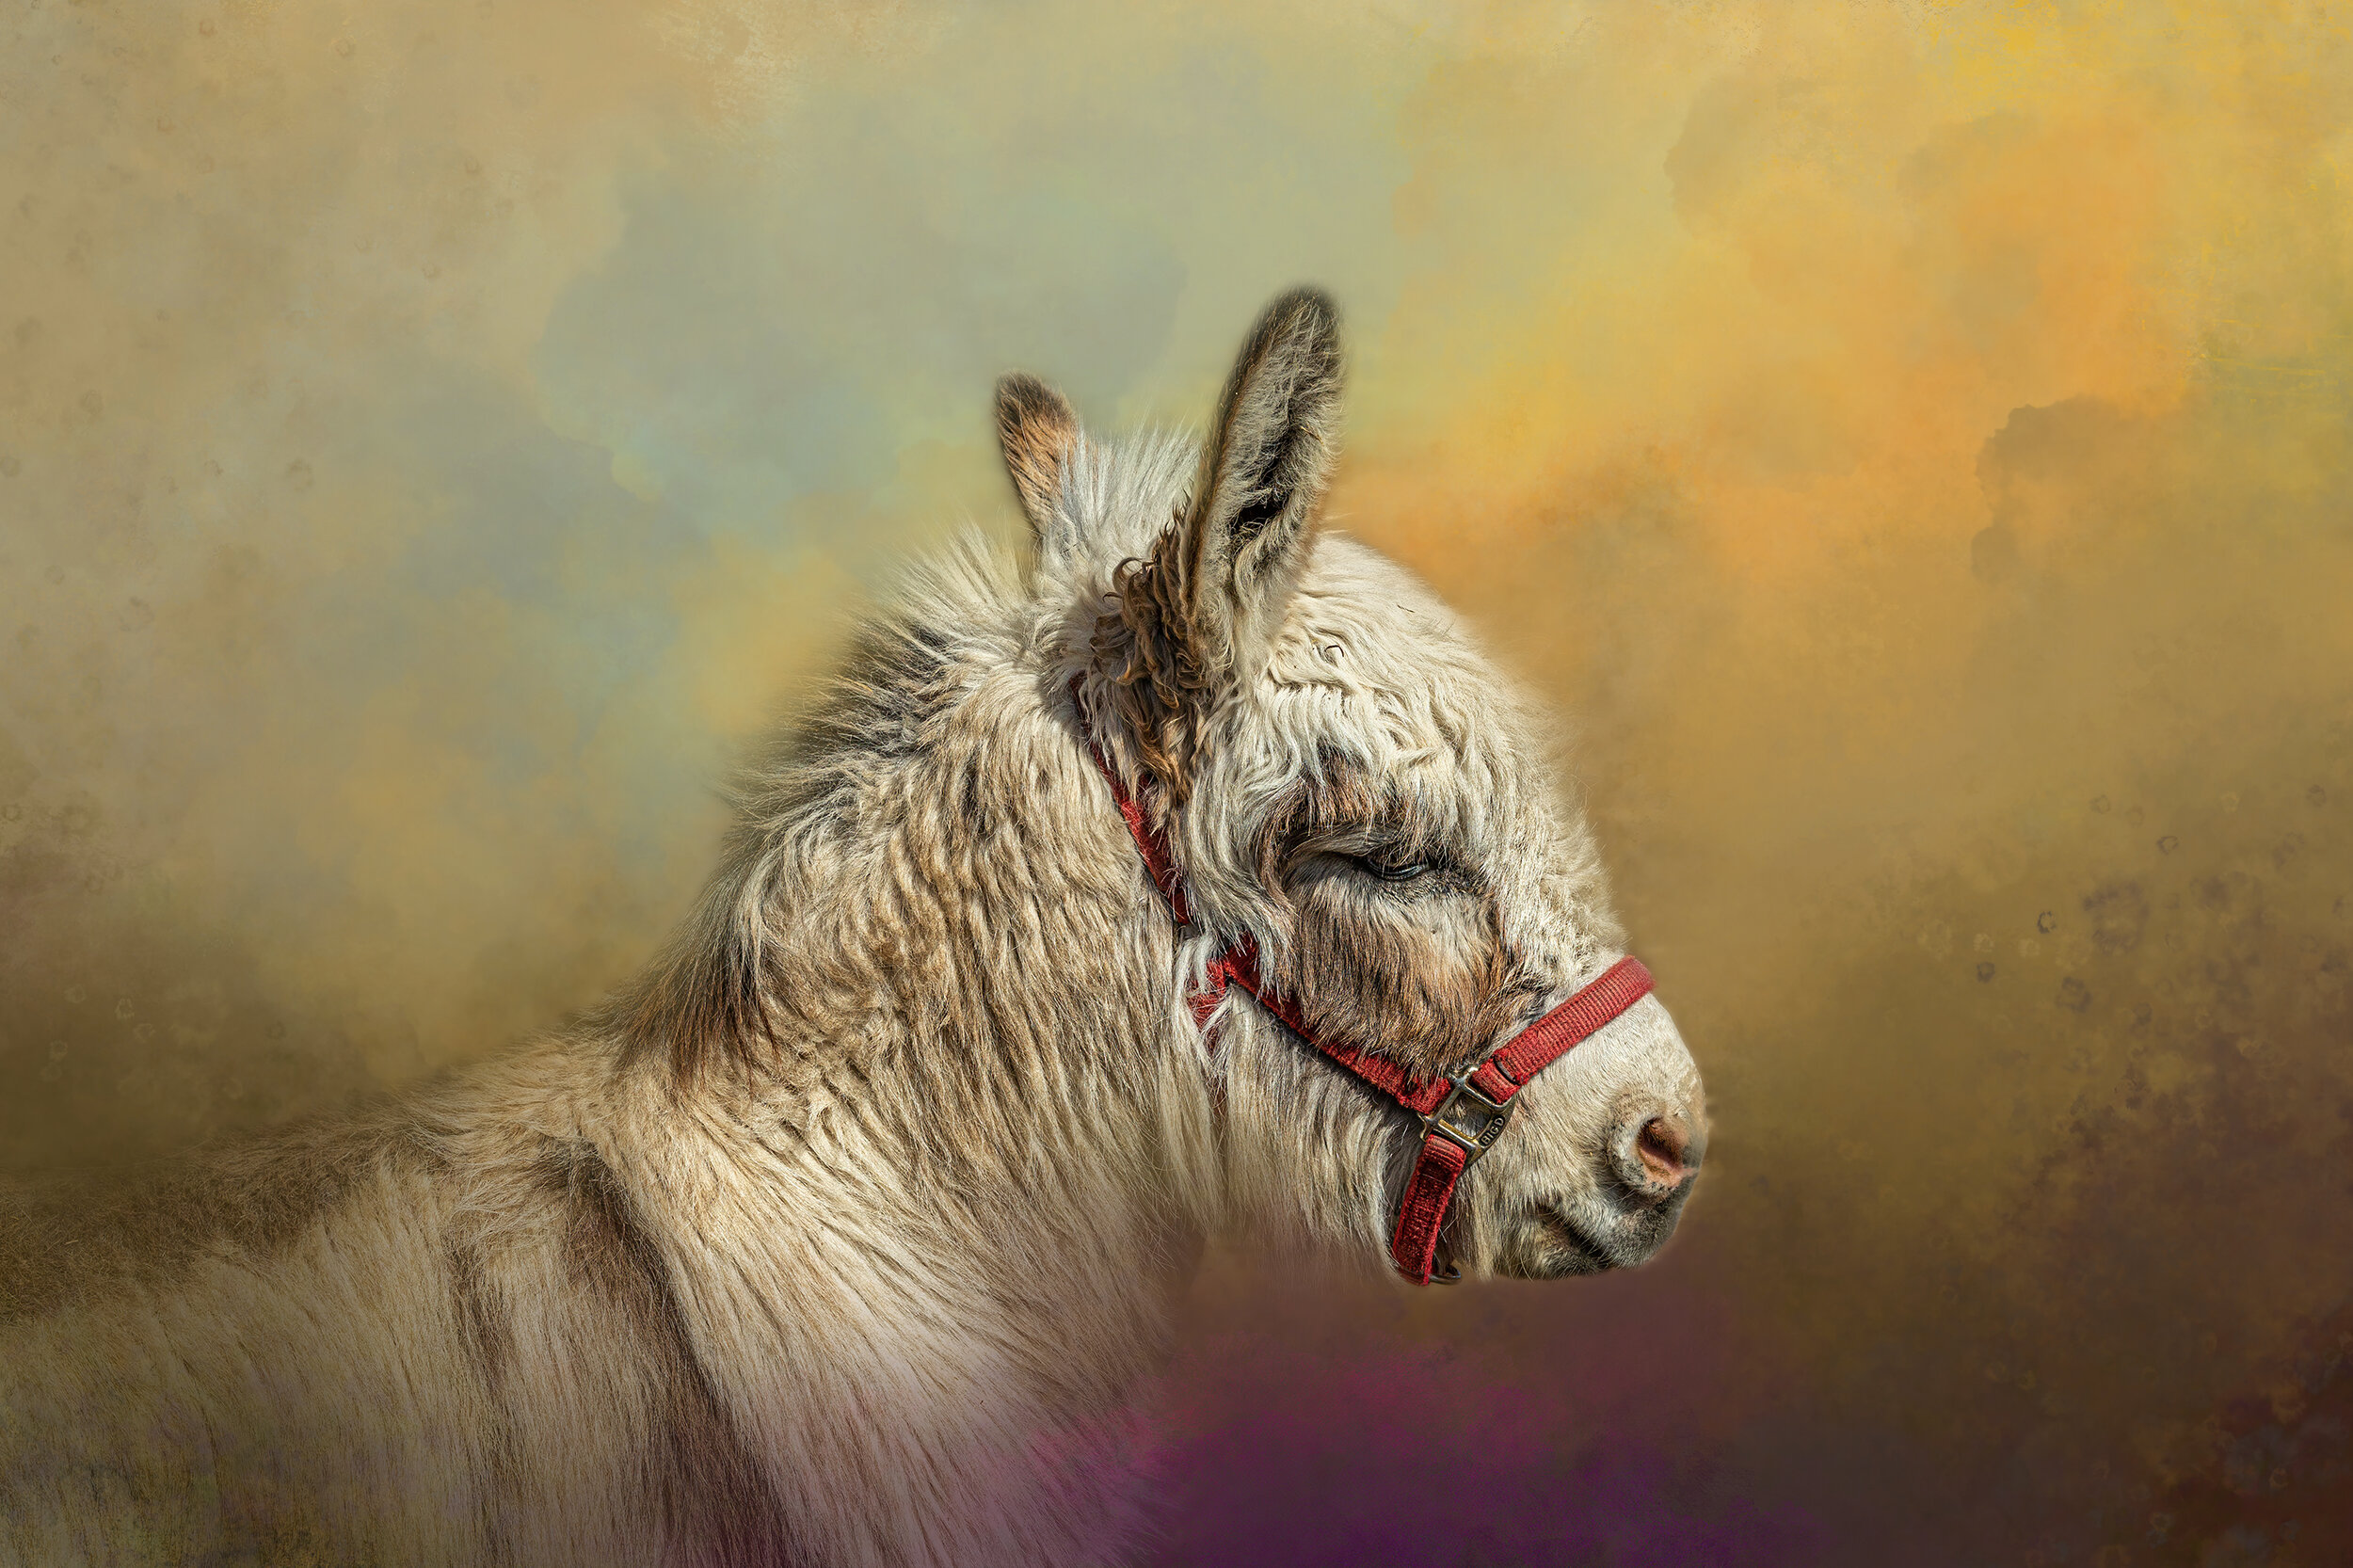 William, Primrose Donkey Sanctuary 2020.03.12